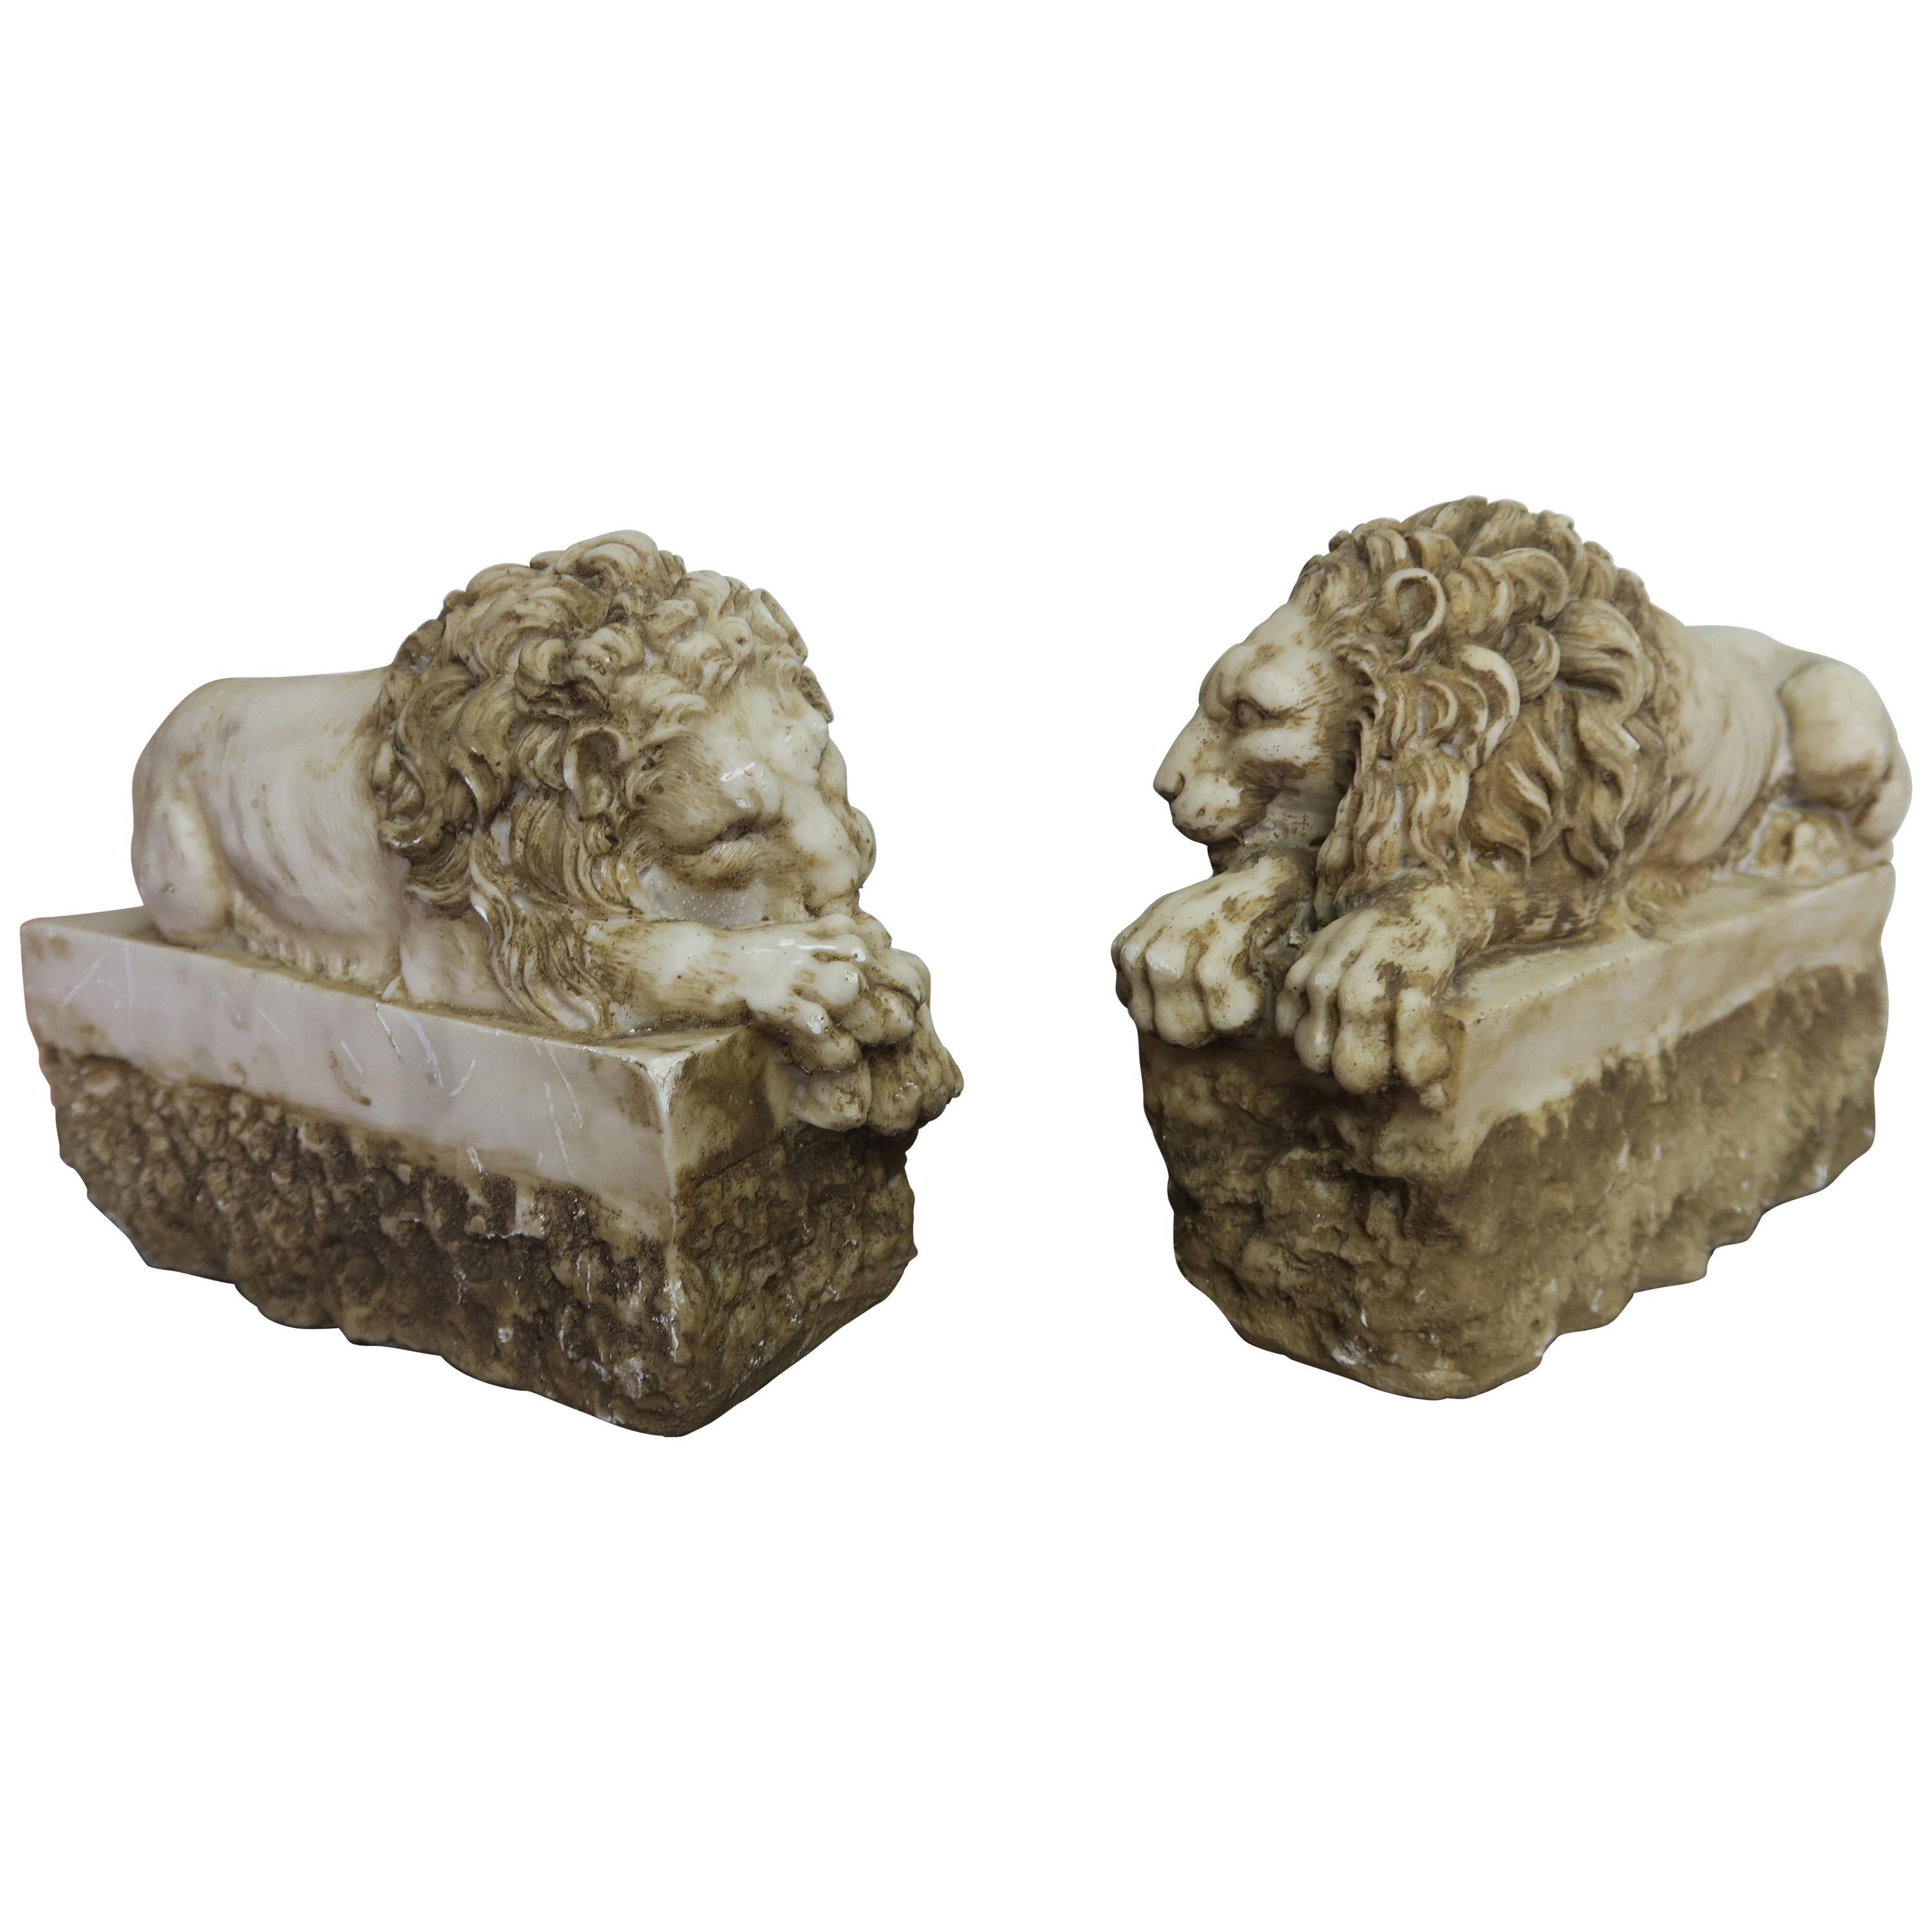 Pair of Carved Stone Replica Lions originally by Antonio Canova